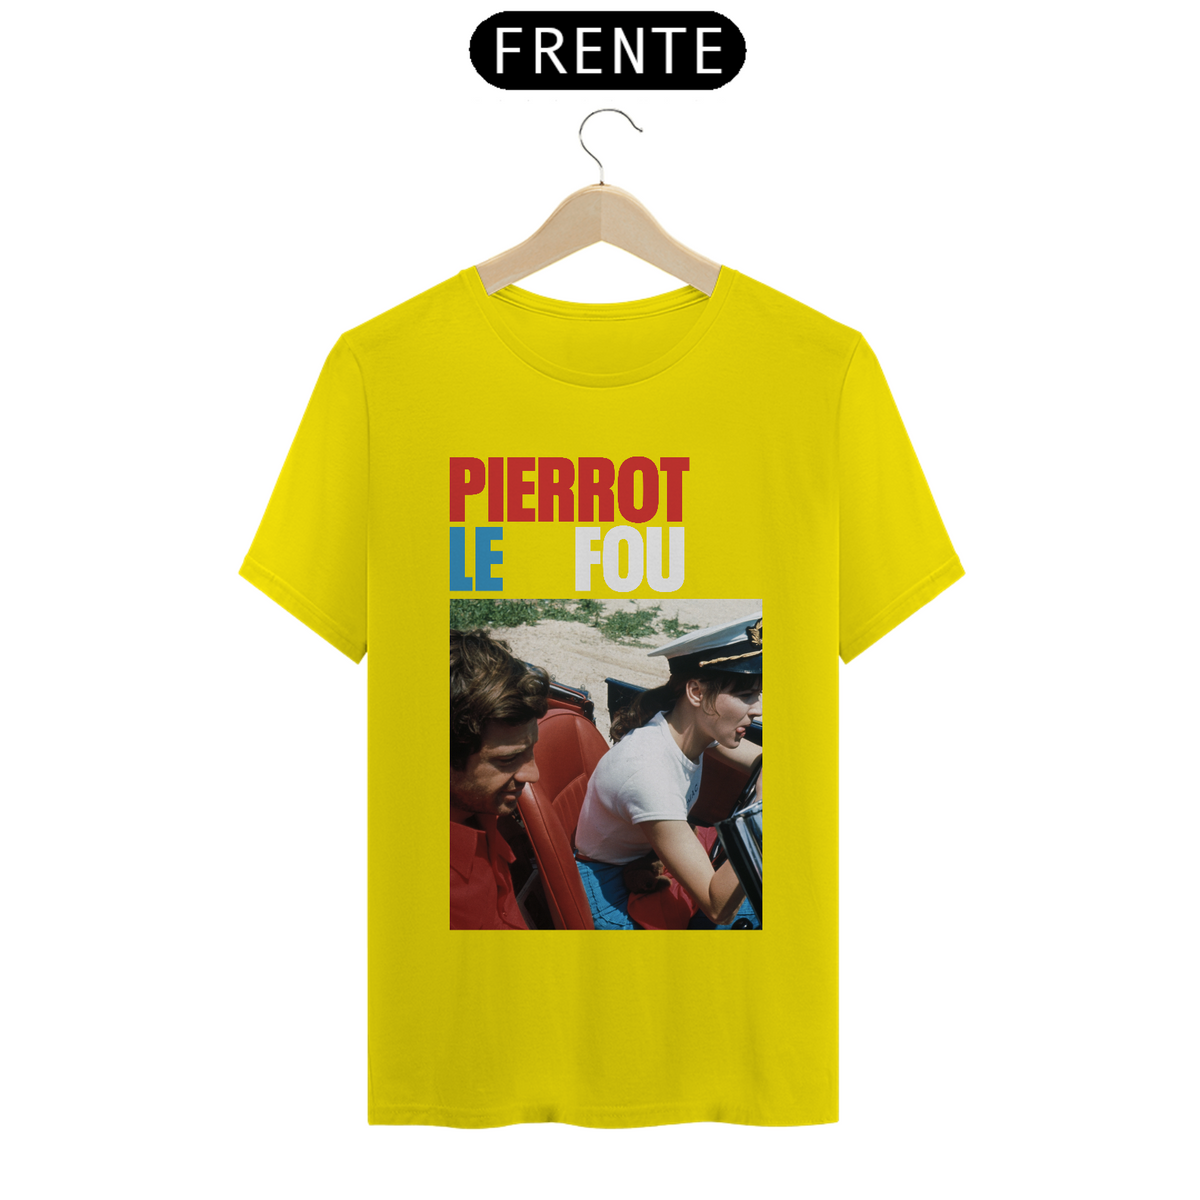 Nome do produto: PIERROT LE FOU (GODARD)